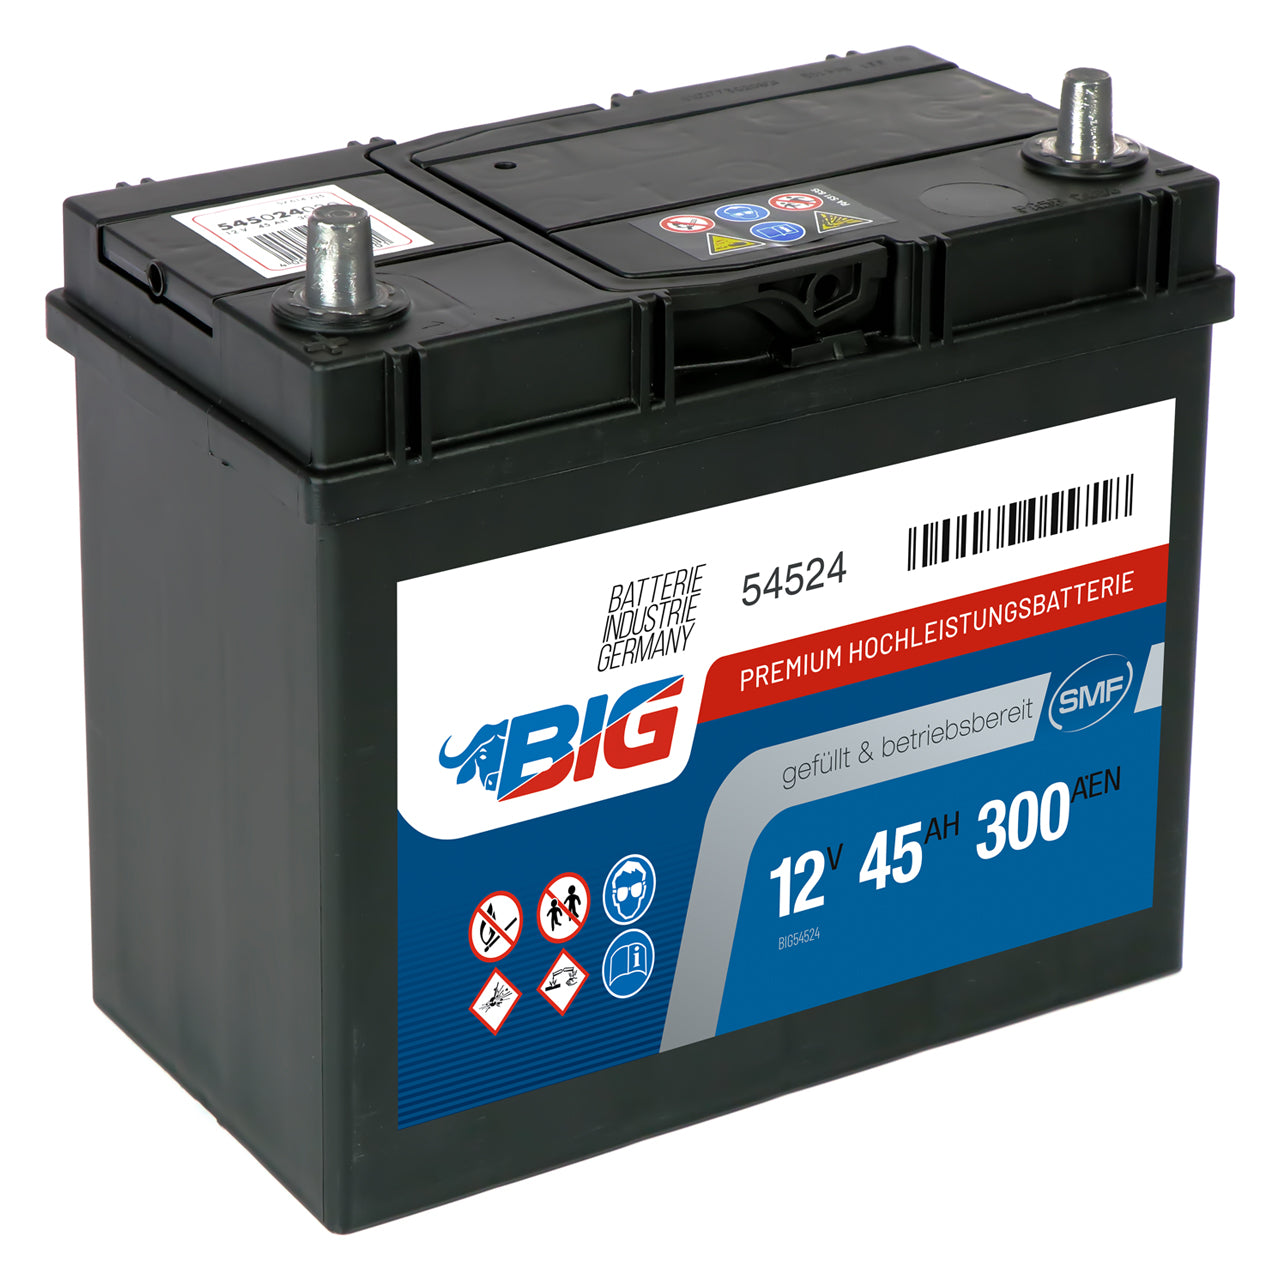 EXAKT Autobatterie 12V 45Ah Starterbatterie PKW KFZ Auto Batterie (45Ah) :  : Auto & Motorrad